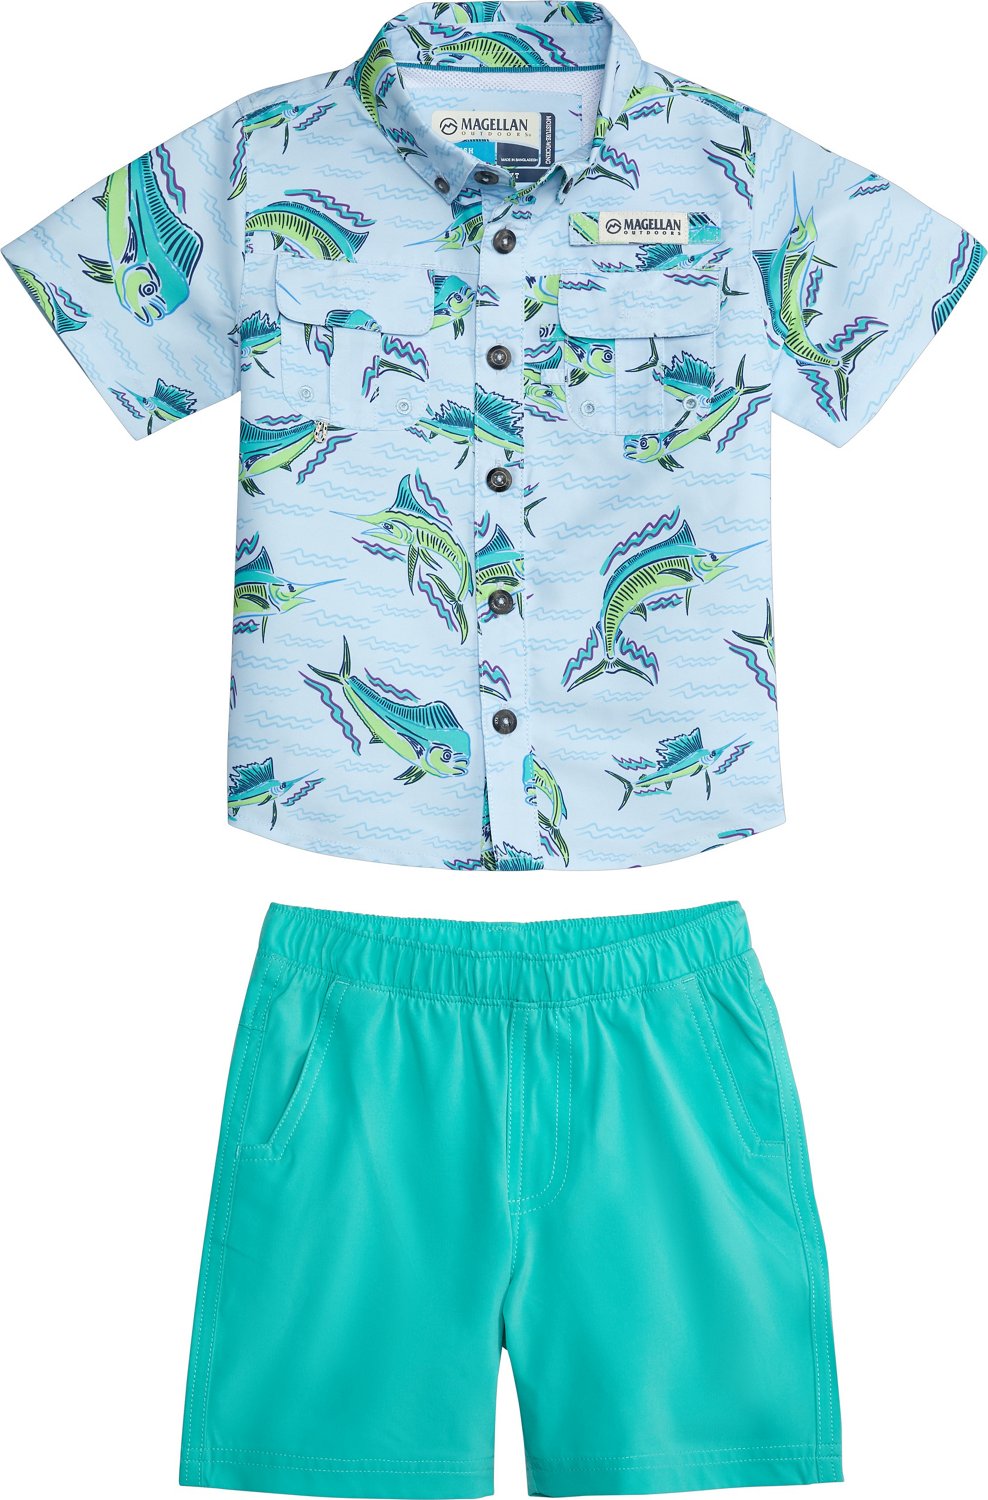 Academy Sports + Outdoors Magellan Outdoors Toddler Boys' Laguna Madre  Print Shirt and Shorts Set